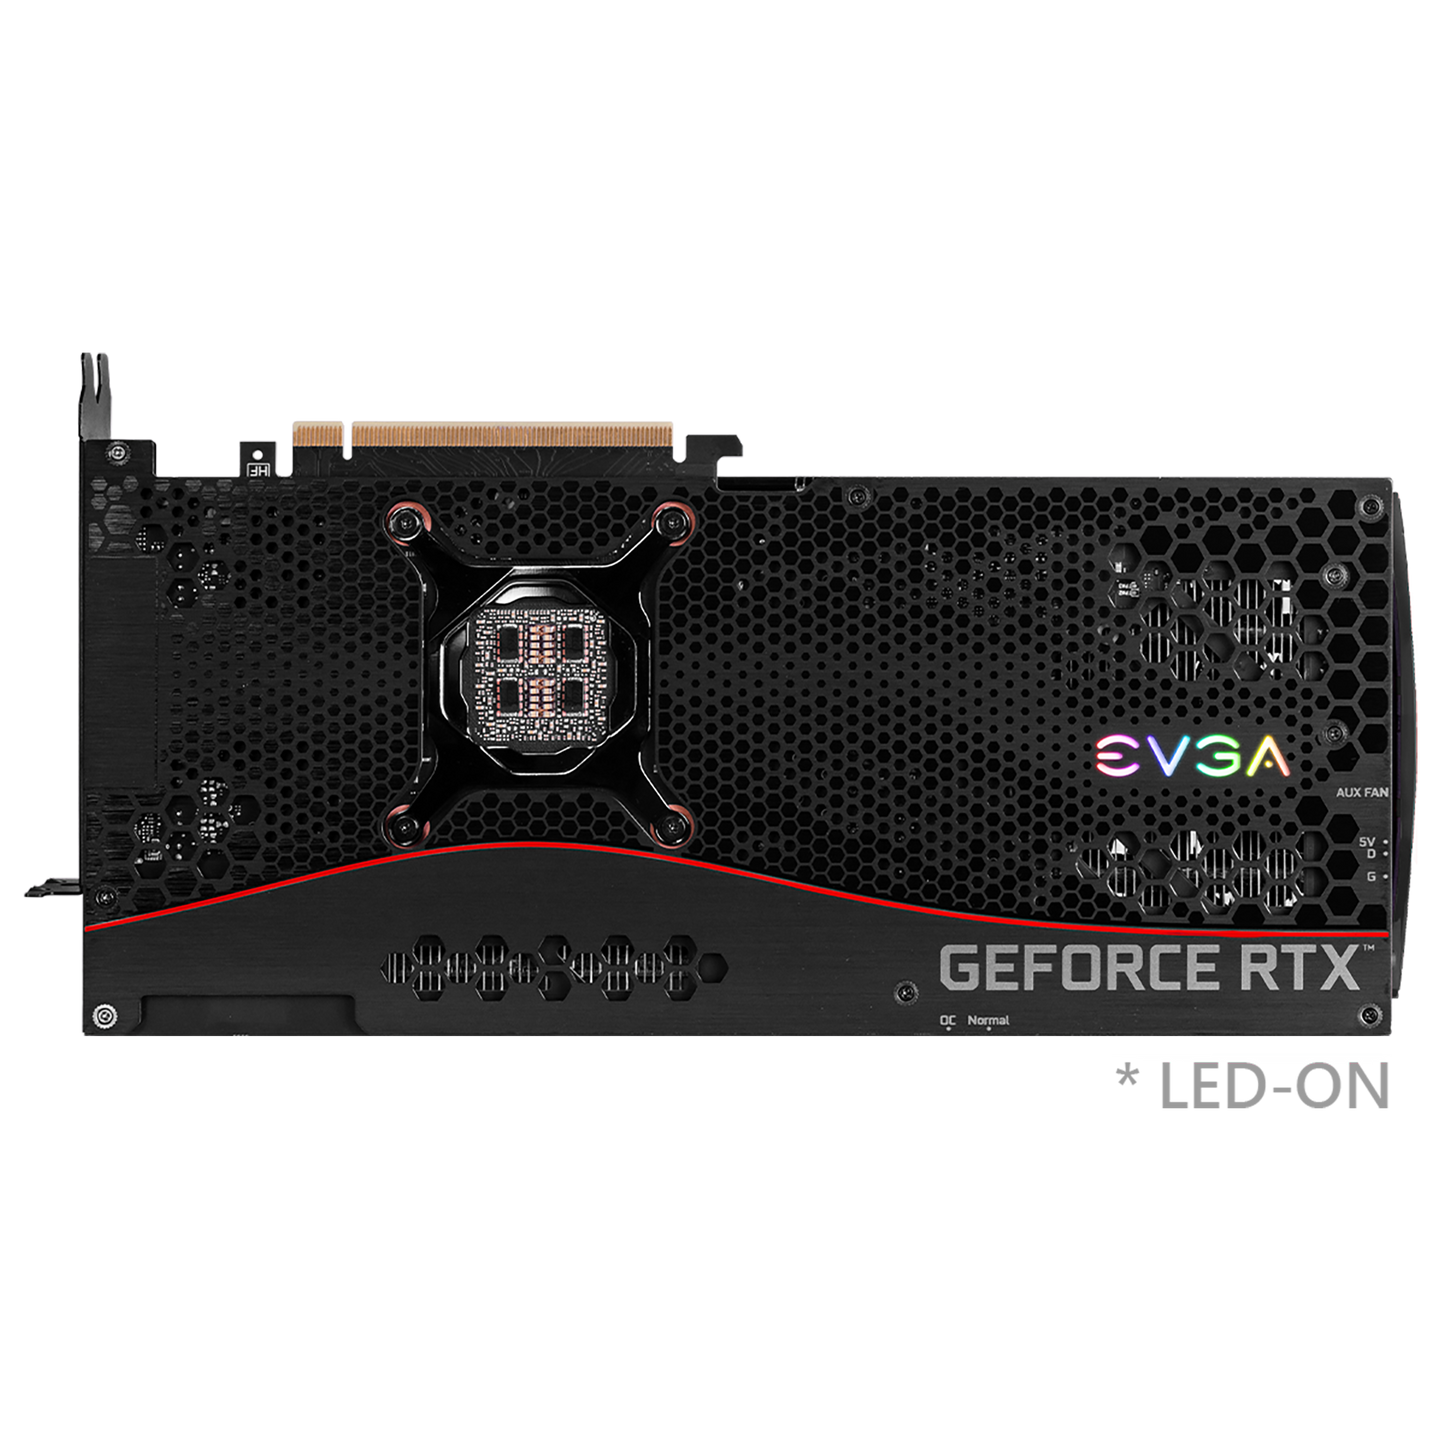 EVGA GeForce RTX 3080 FTW3 GAMING 10GB GDDR6X Graphics Card